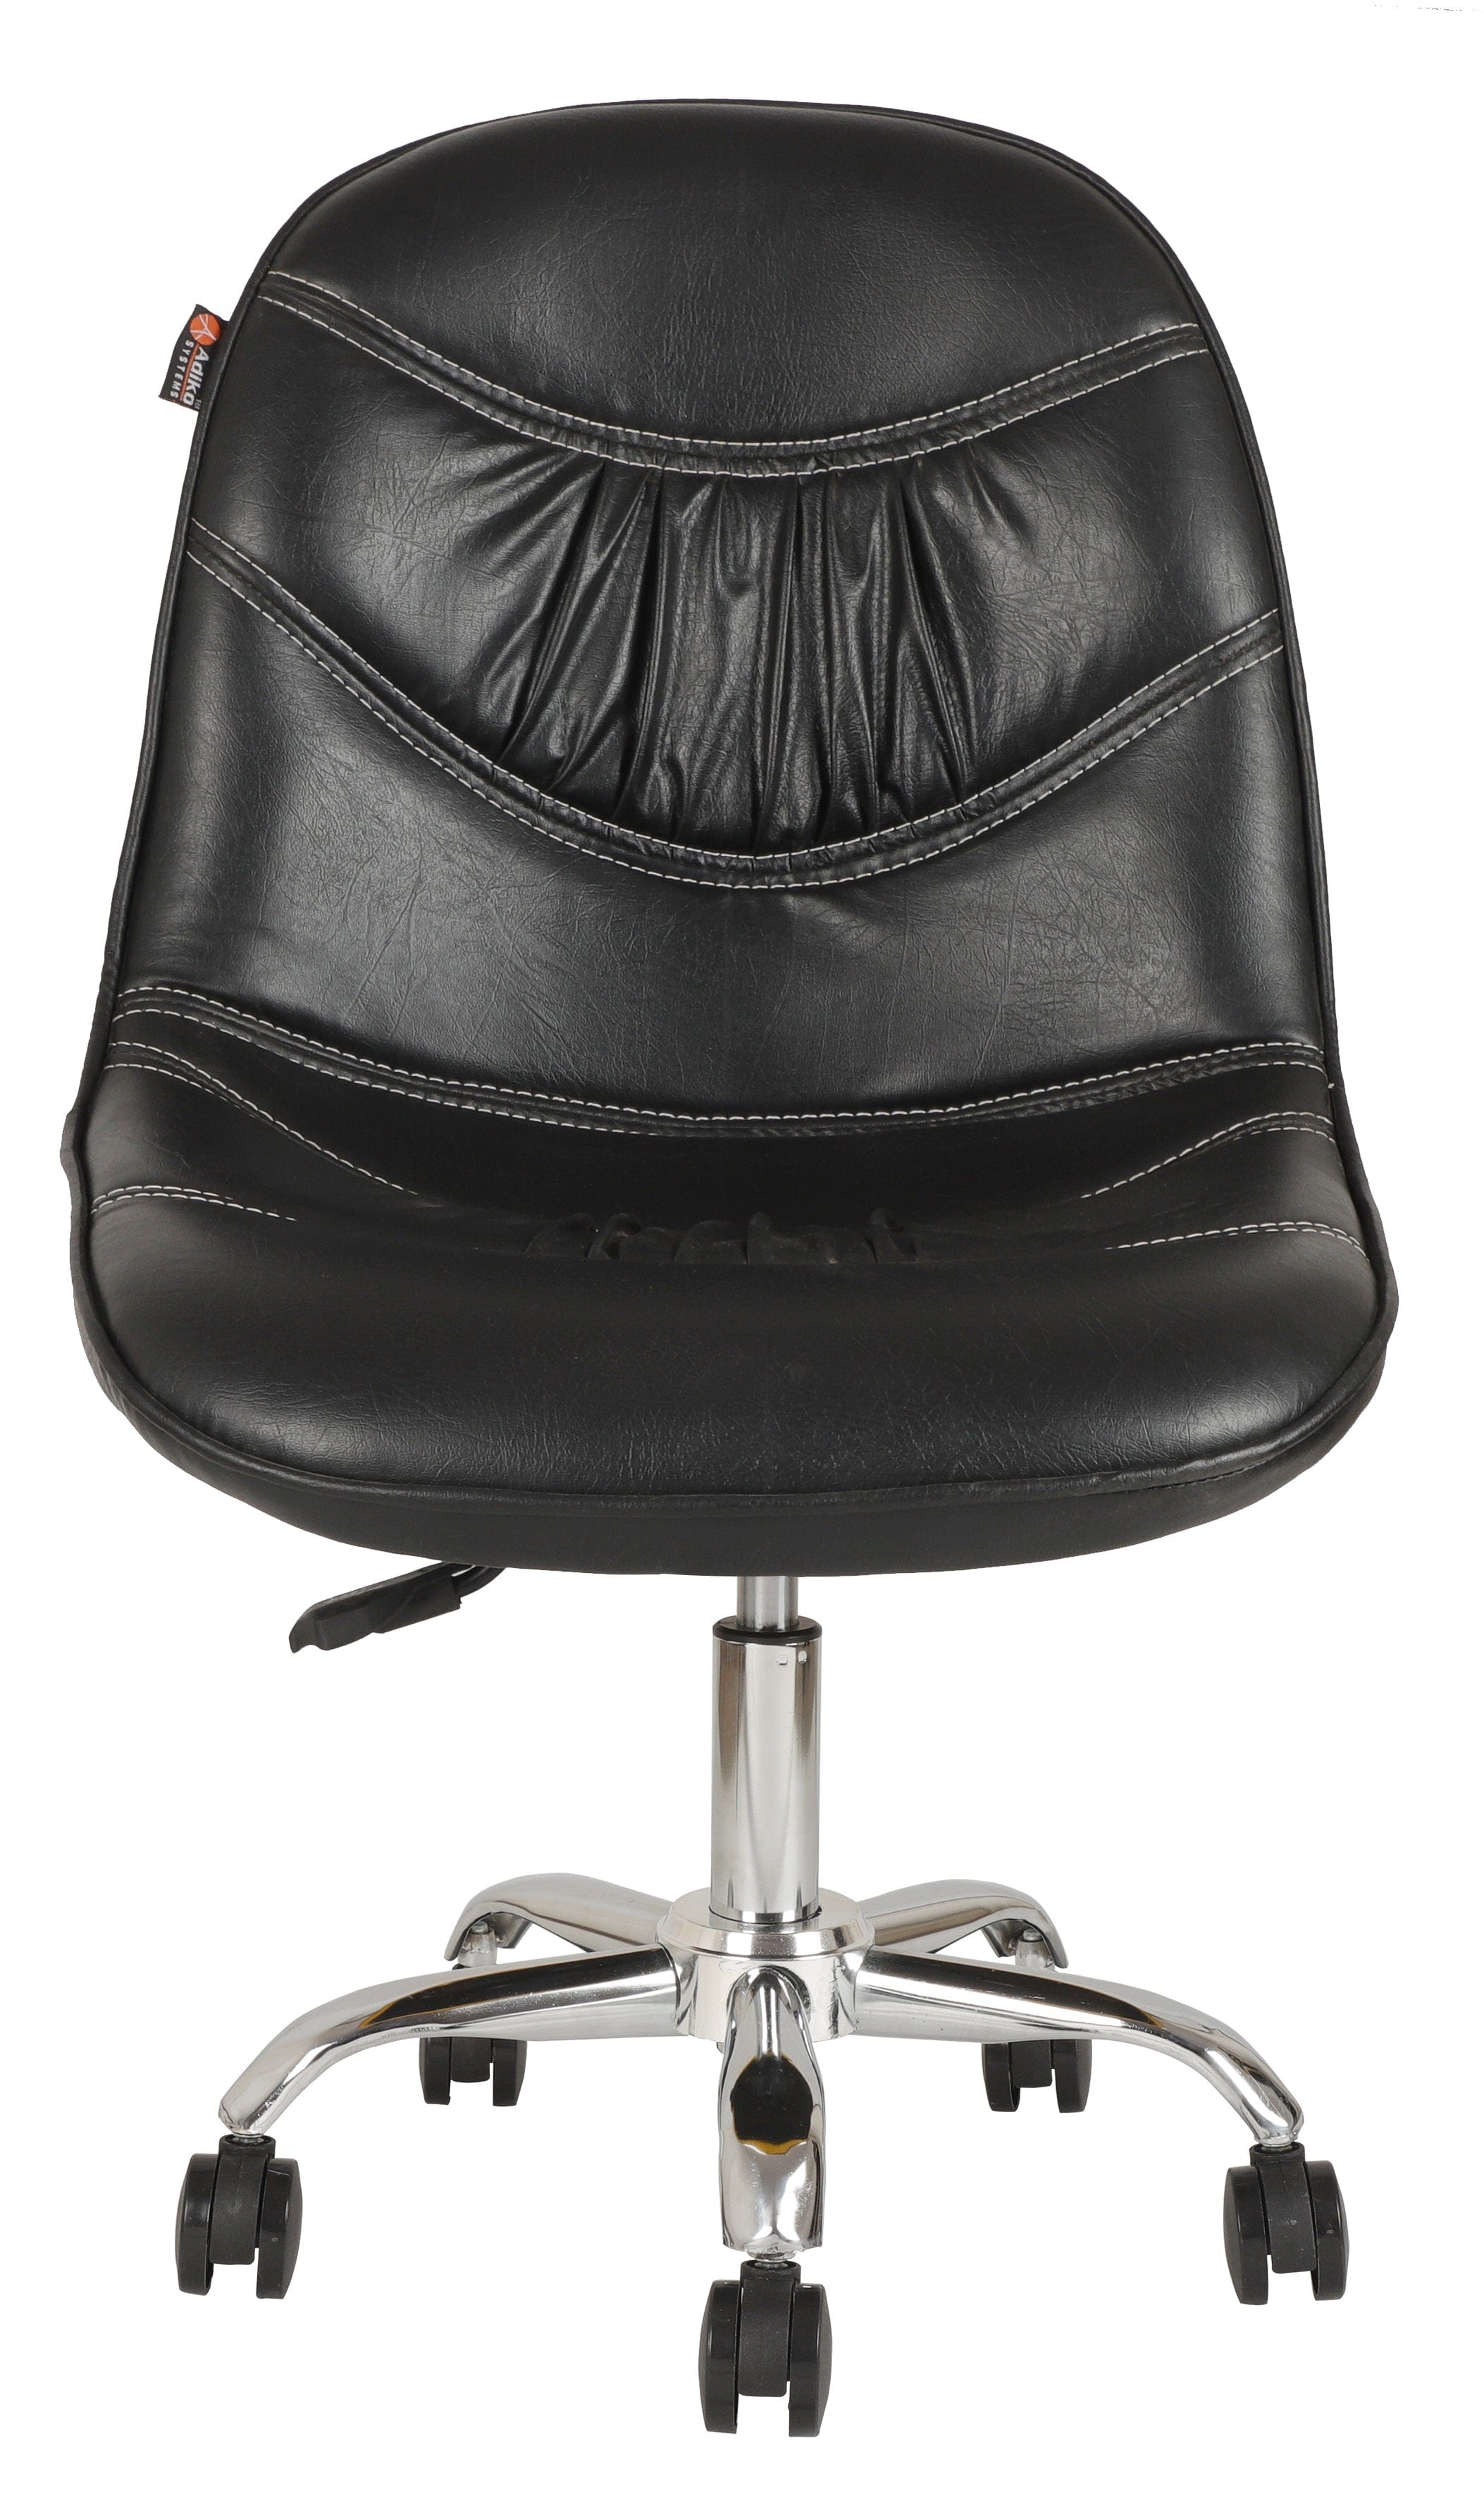 Adiko Lounge Chair in Black